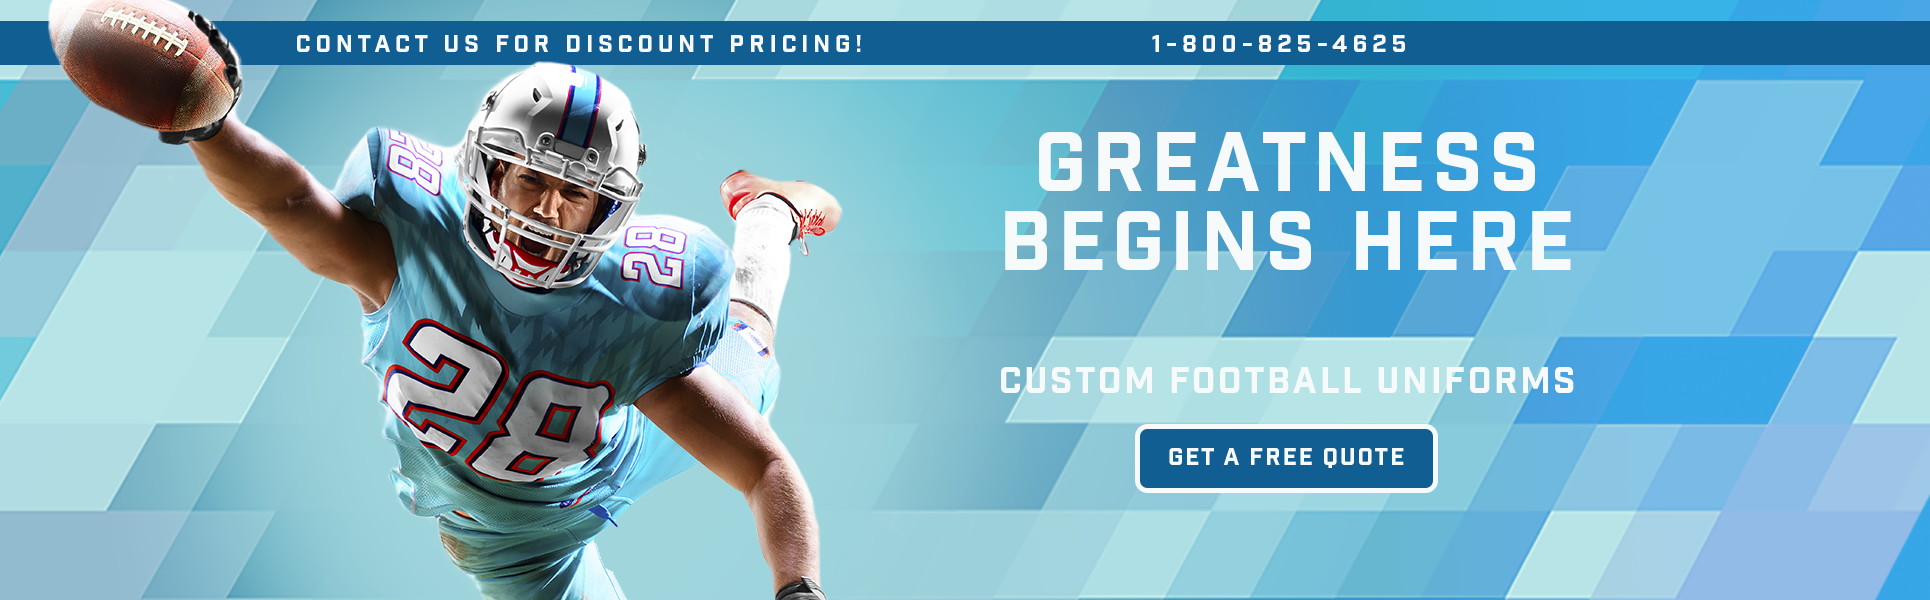 cheap custom jerseys football